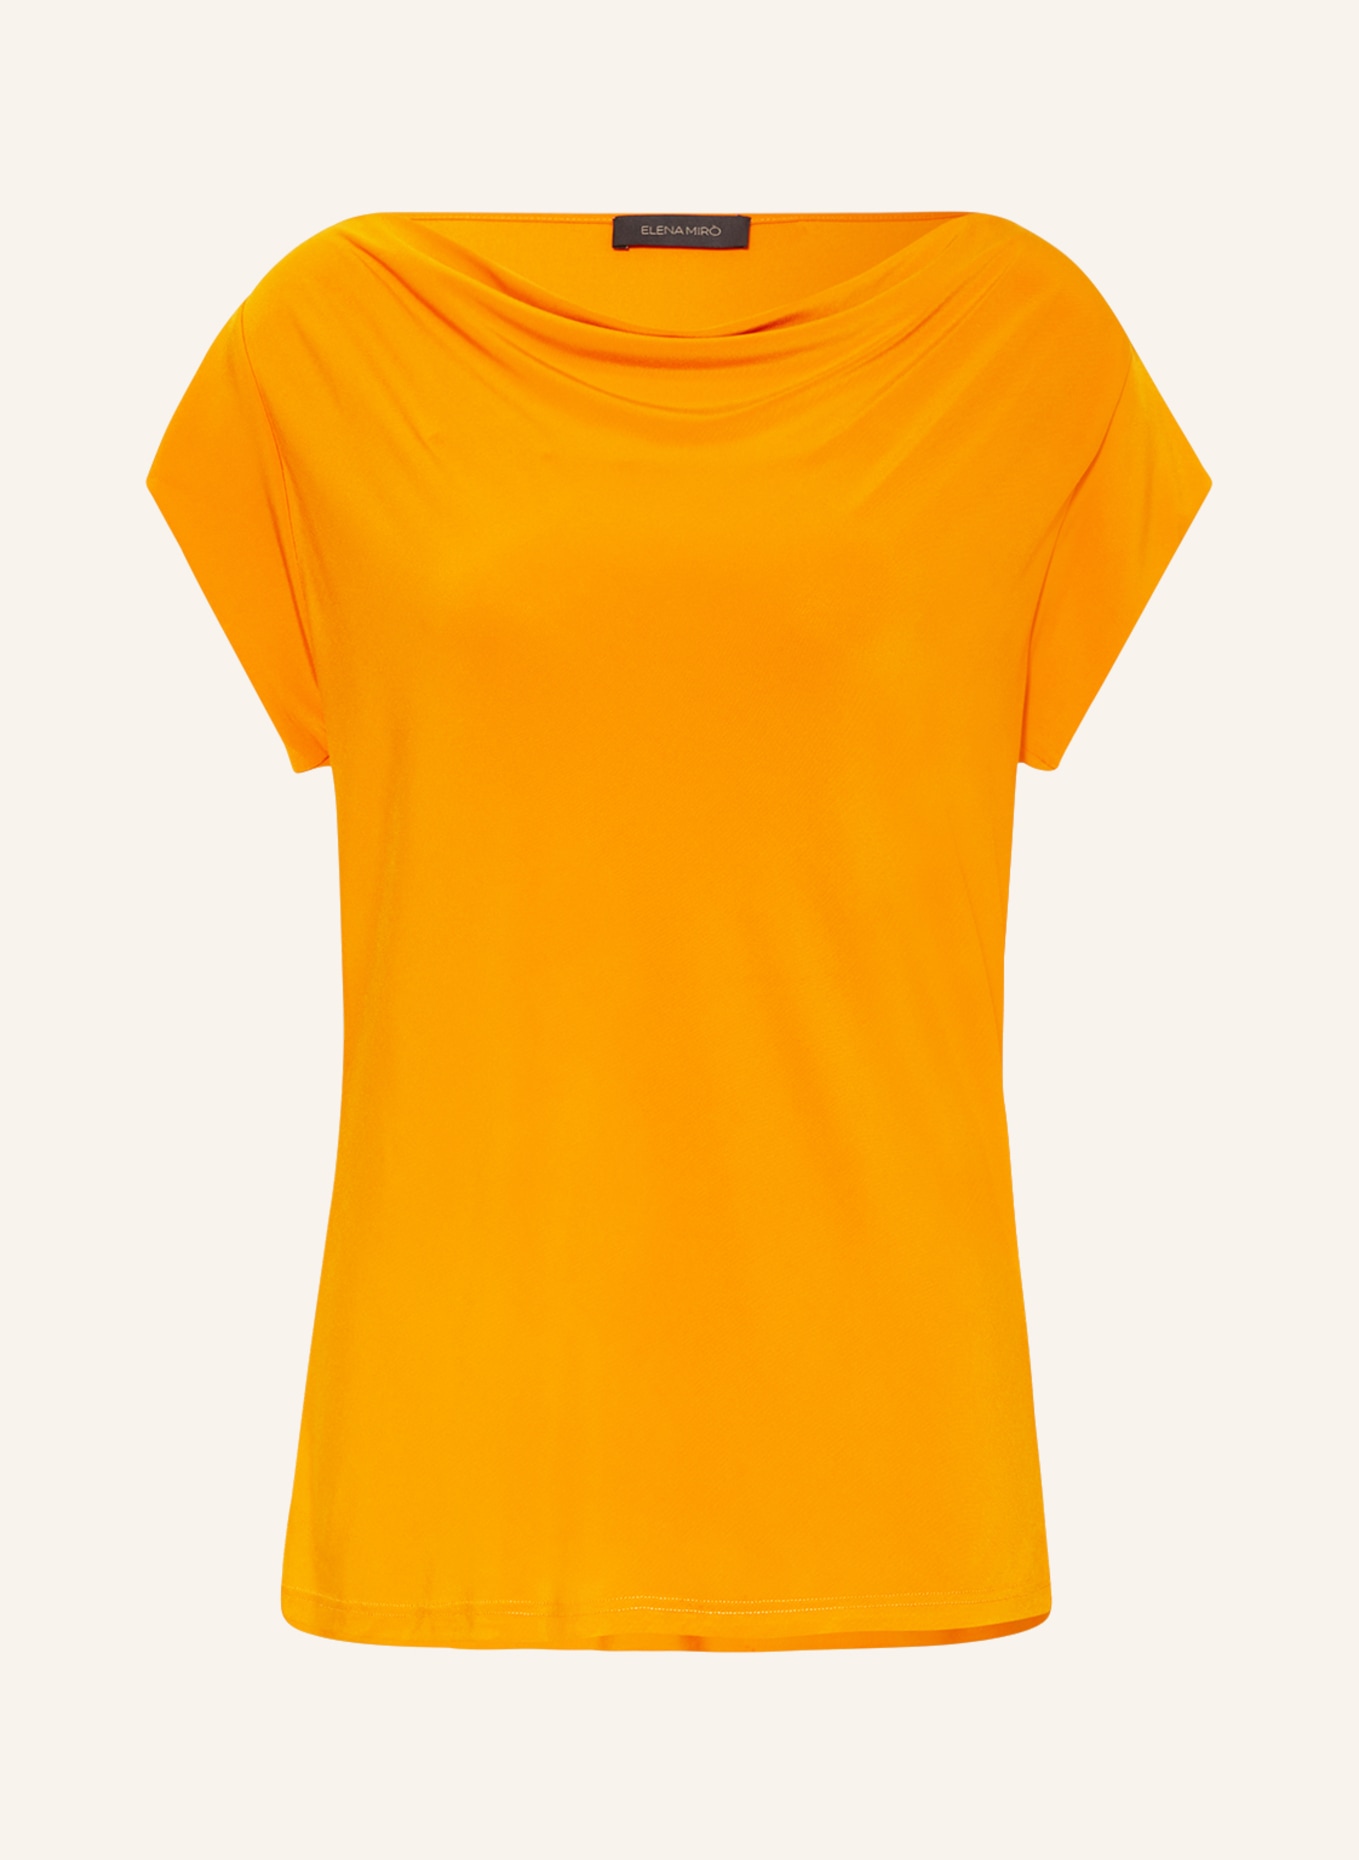 ELENA MIRO Blusenshirt, Farbe: ORANGE (Bild 1)